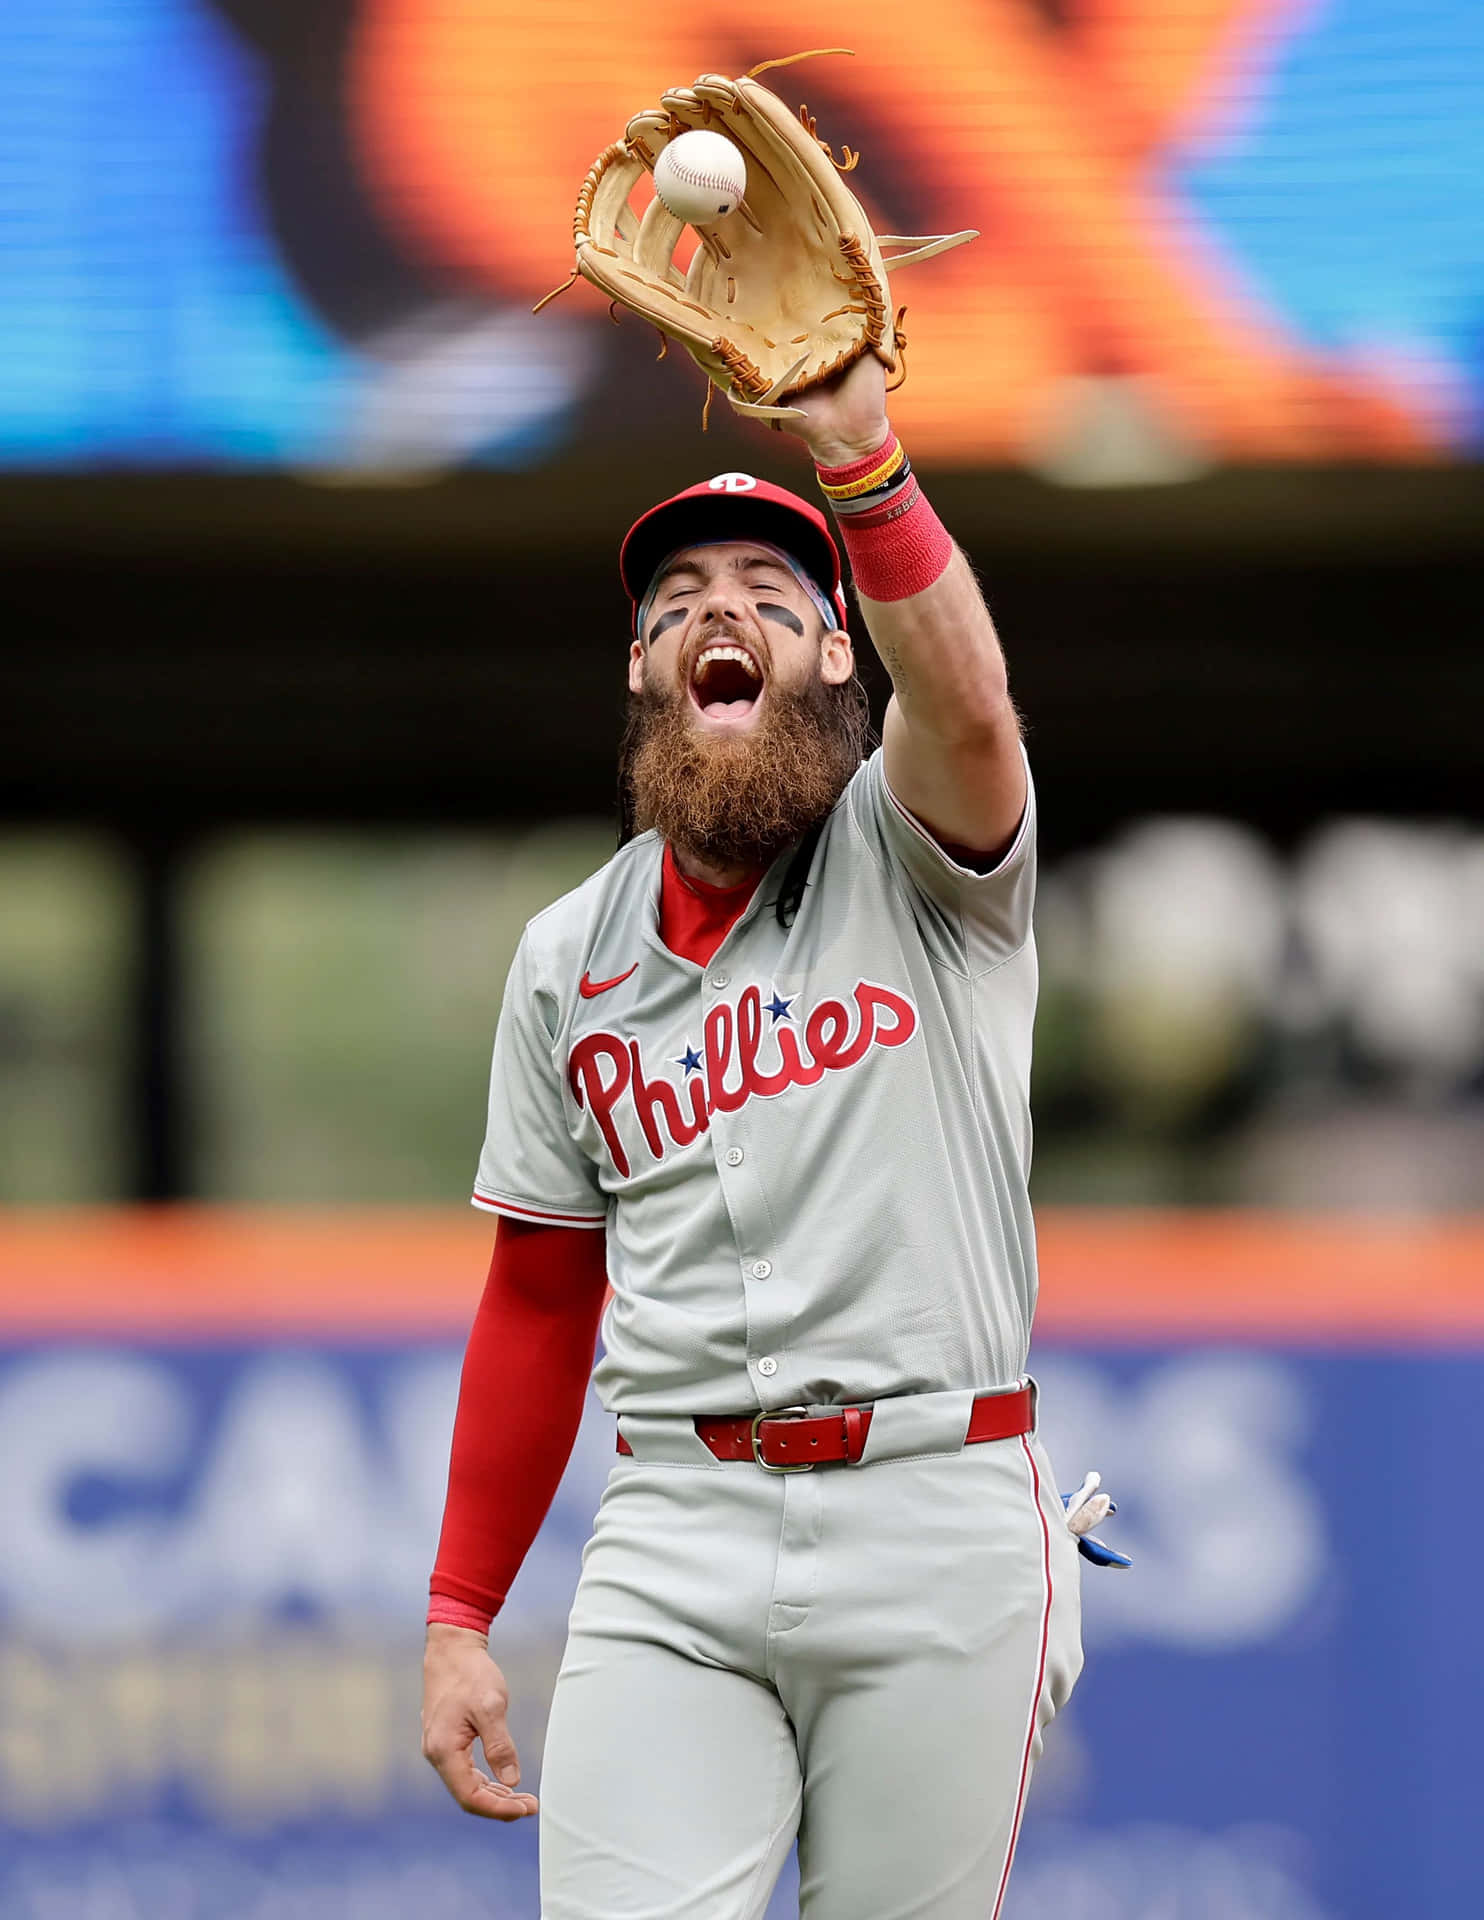 Phillies Player Catching Baseball Wallpaper